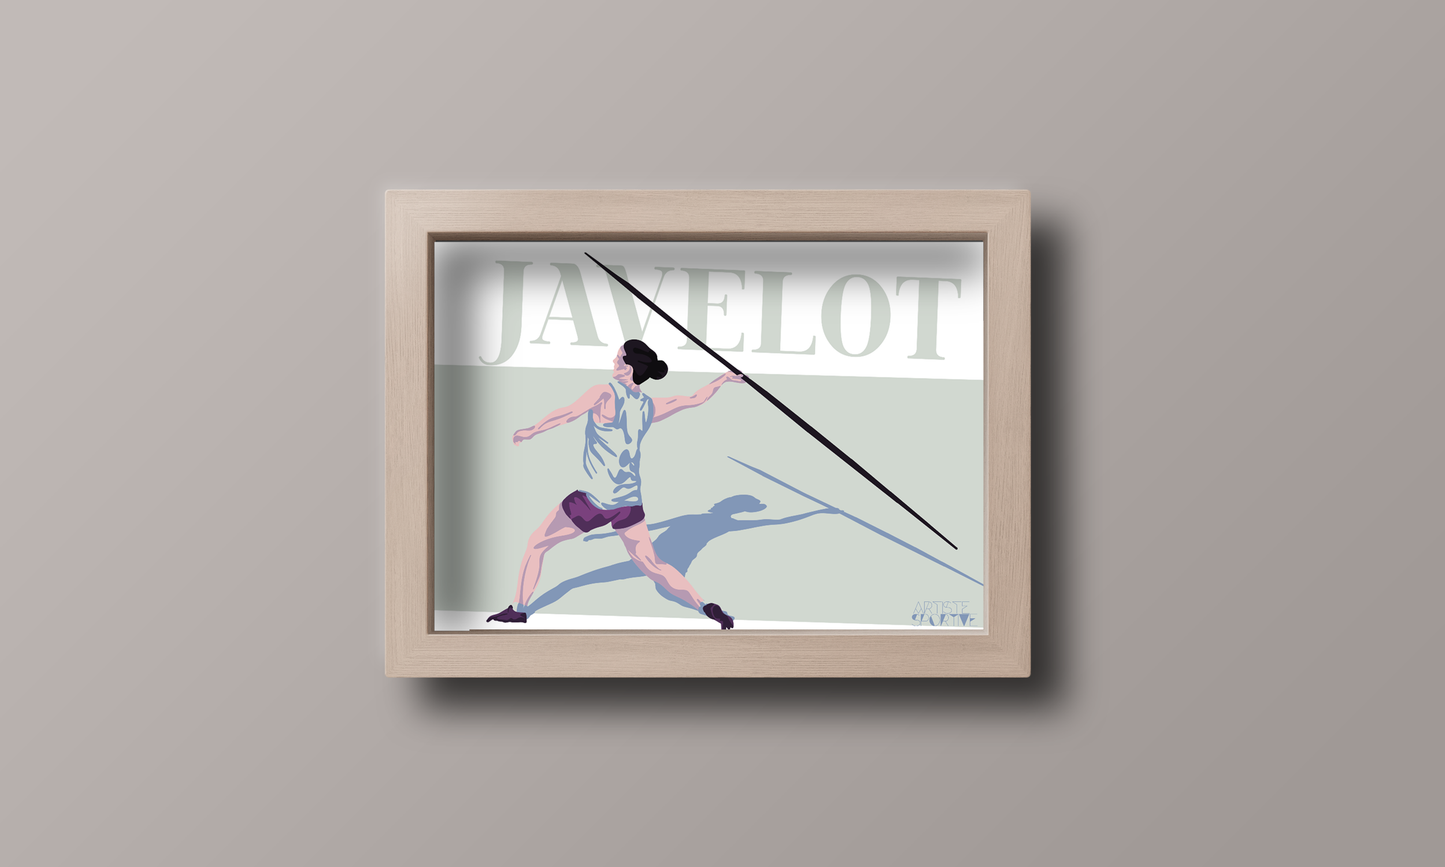 Affiche athlétisme "Javelot femme"